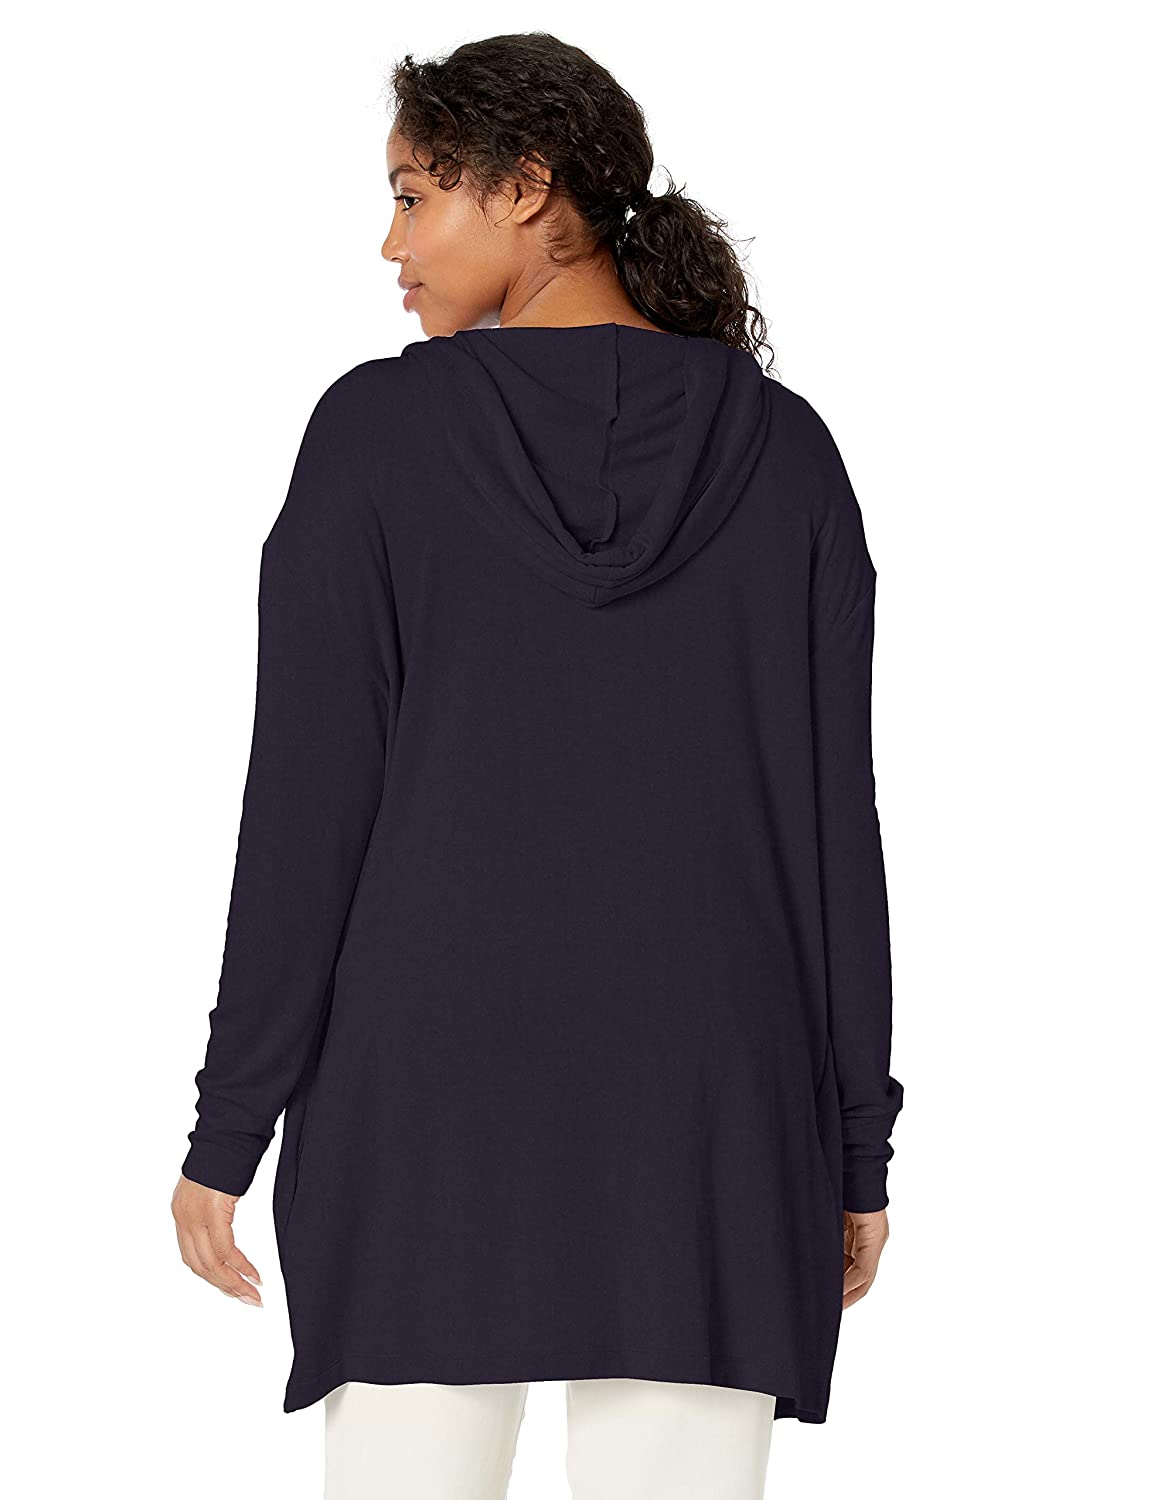 Brand Daily Ritual Women/'s Supersoft Terry Hooded Short-Sleeve Sweatshirt